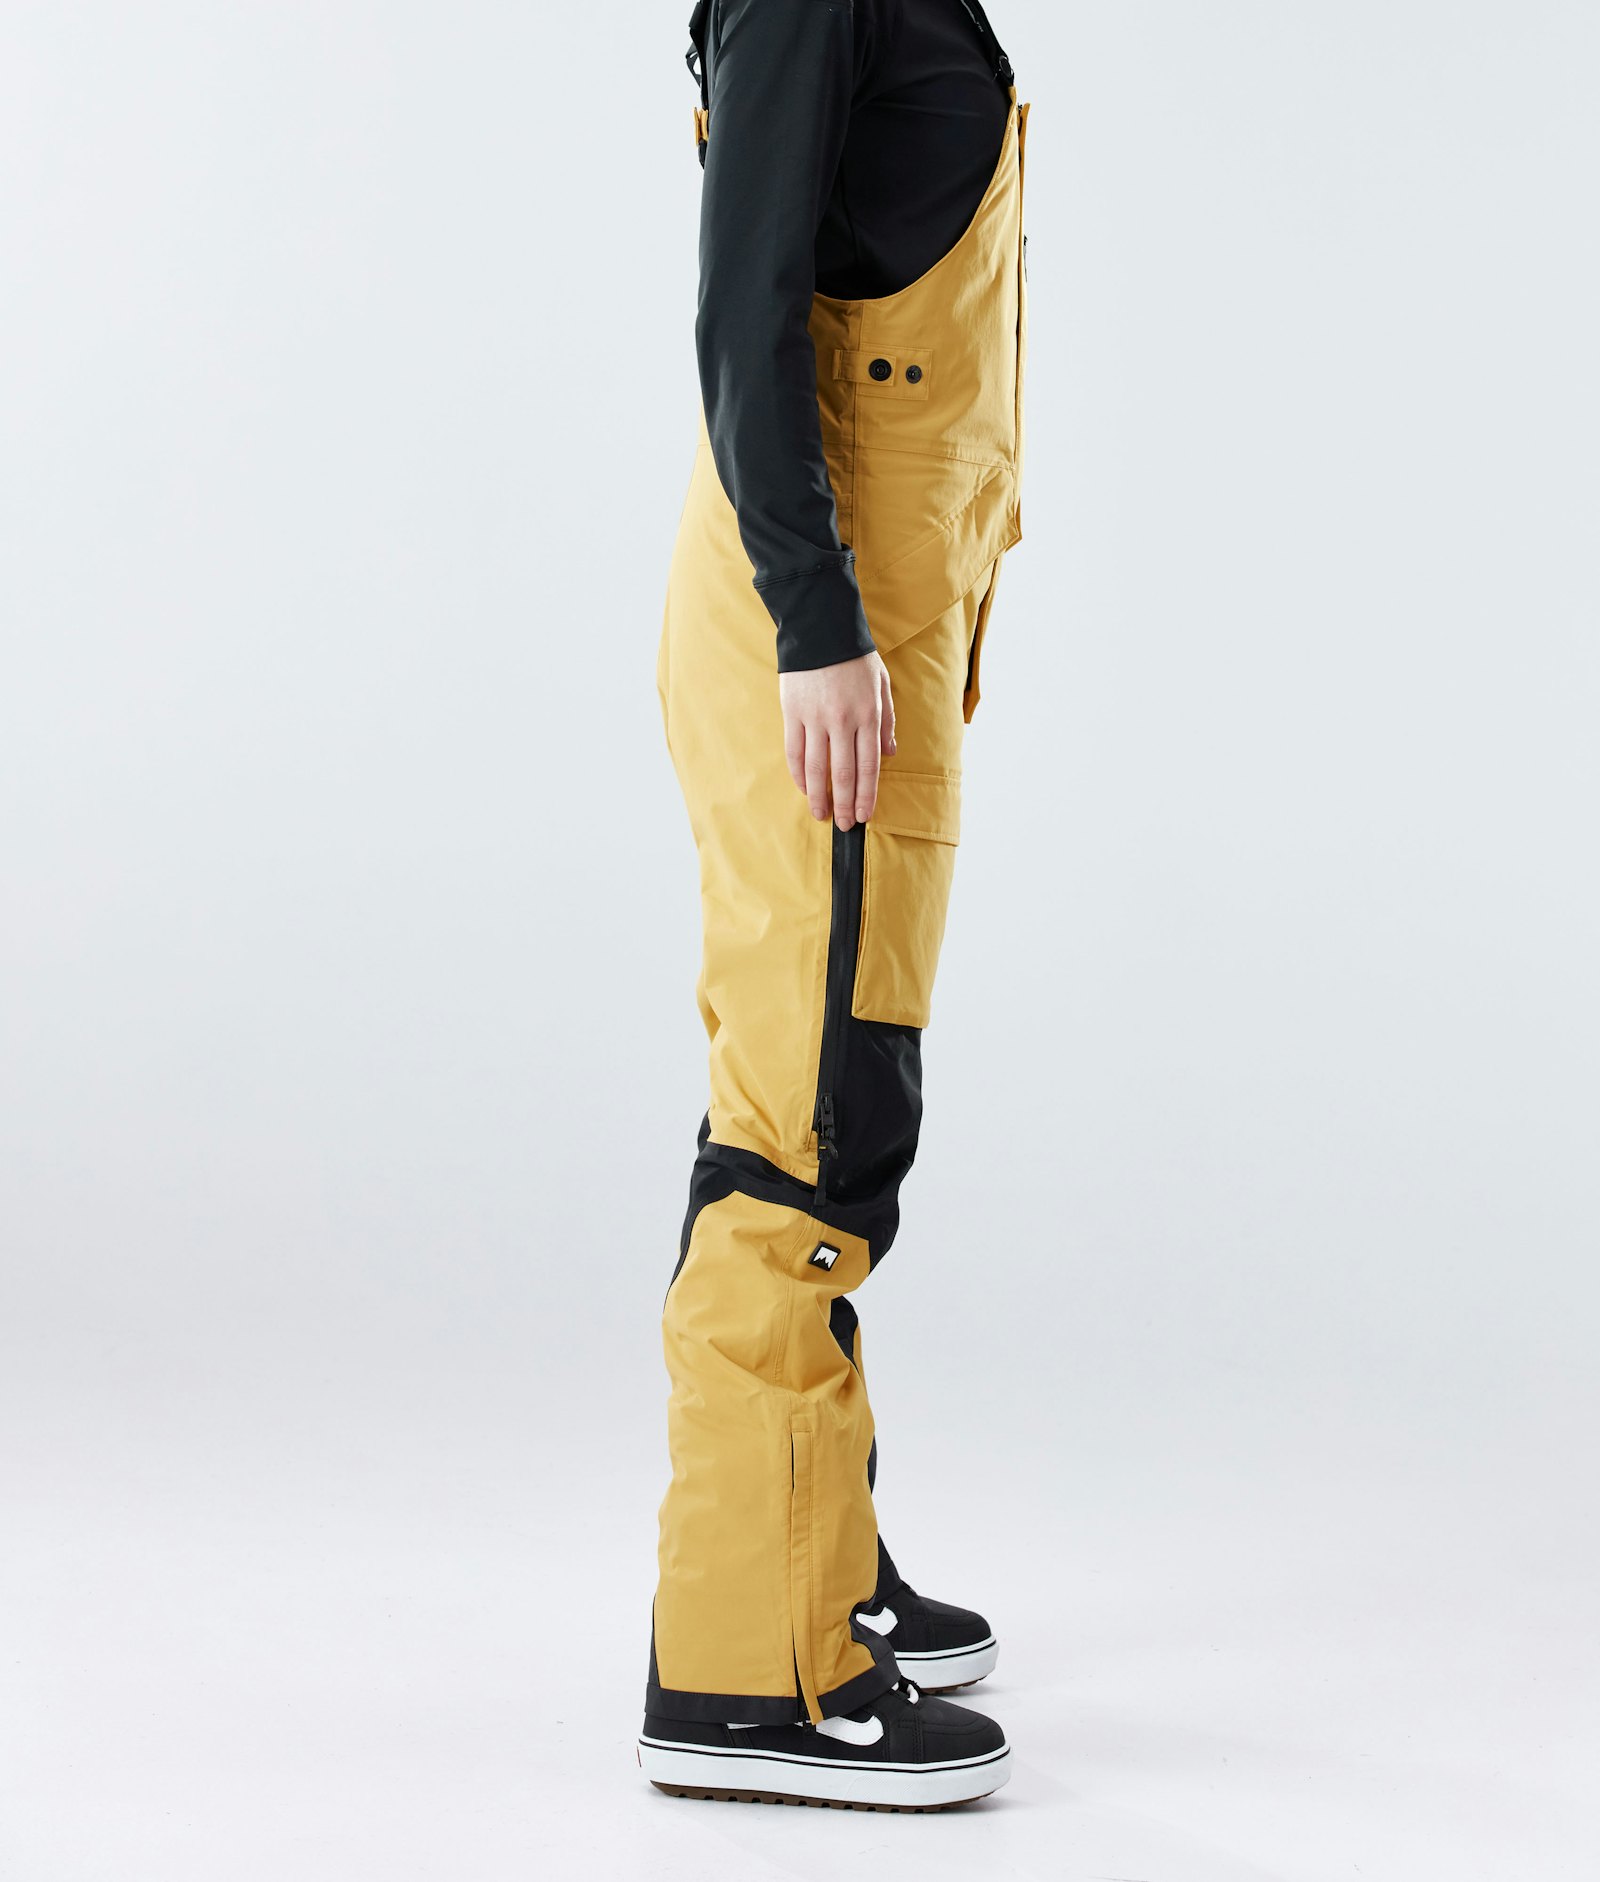 Fawk W 2020 Snowboard Pants Women Yellow/Black